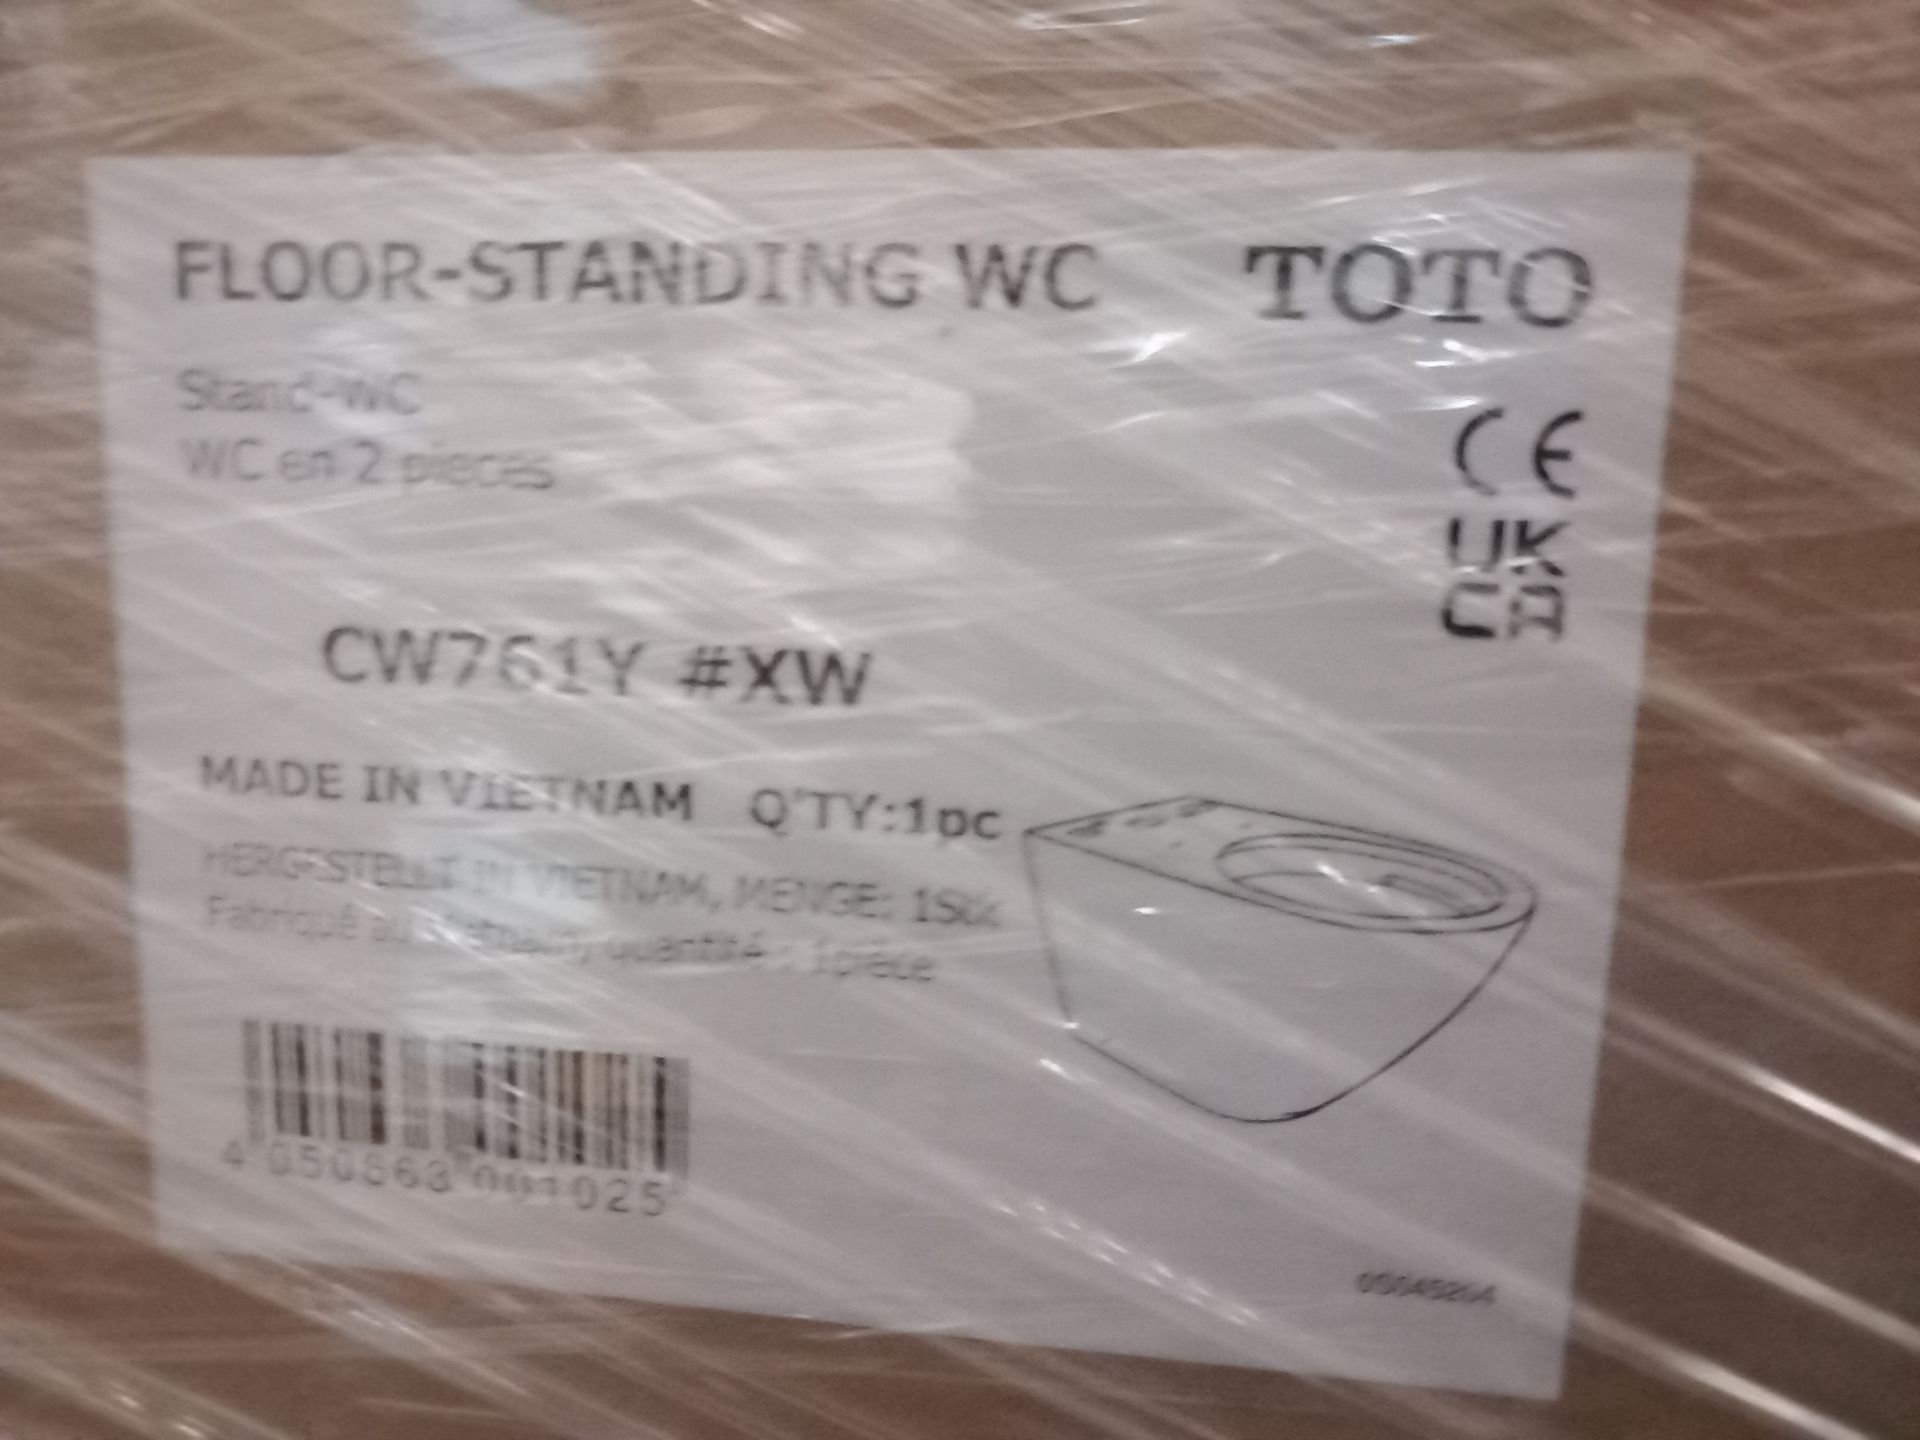 2x Toto CW761Y #XW floor standing WC - Image 2 of 2